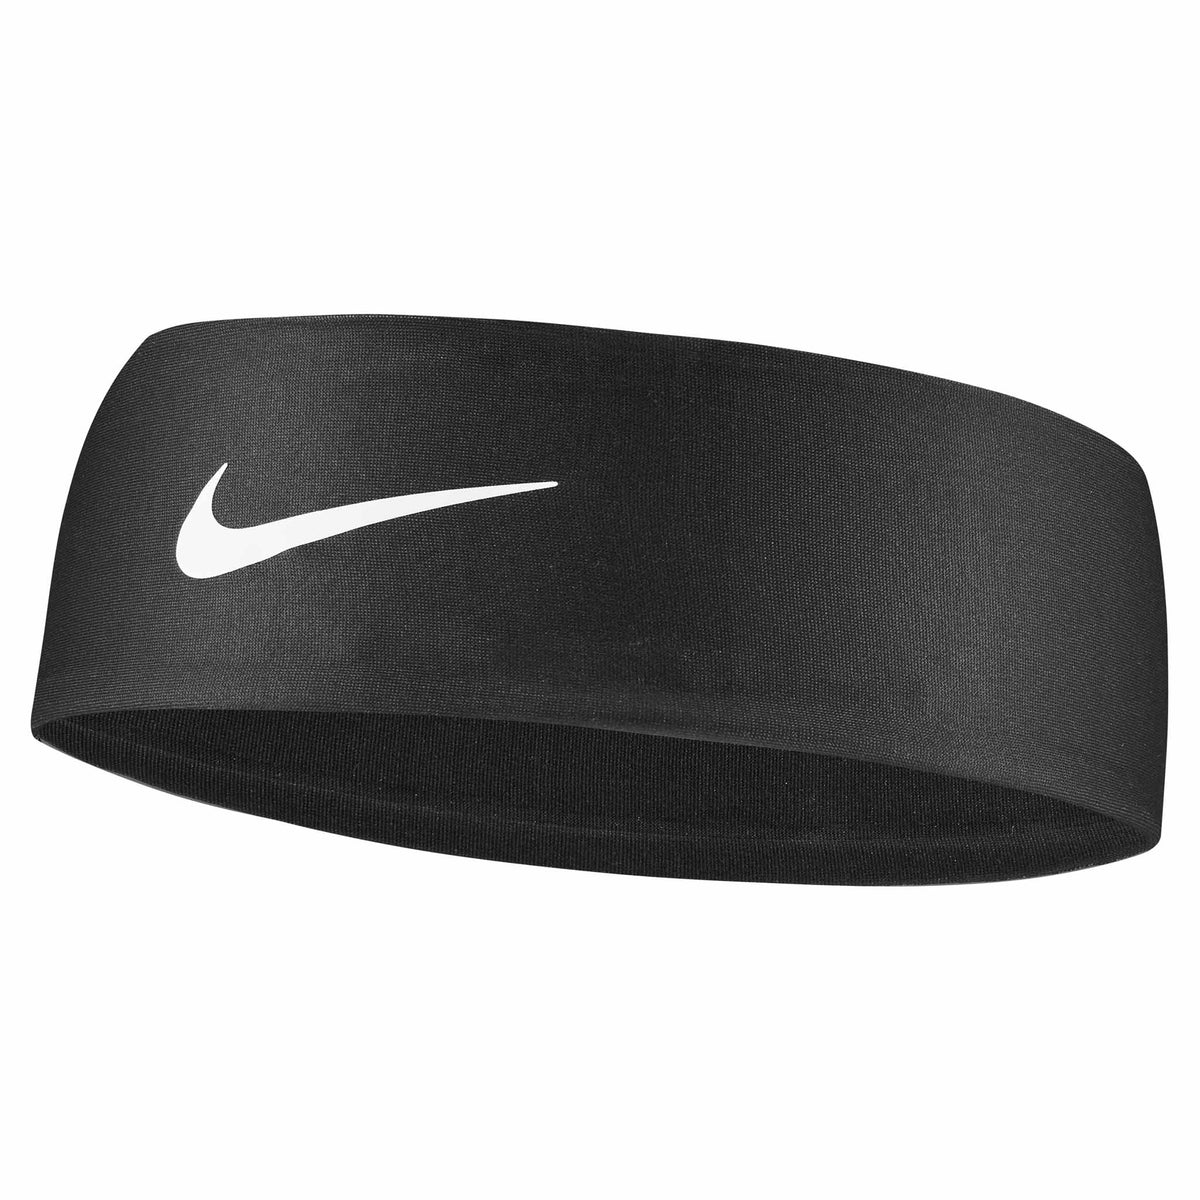 Nike Fury Headband 3.0 bandeaux pour cheveux - Black / White